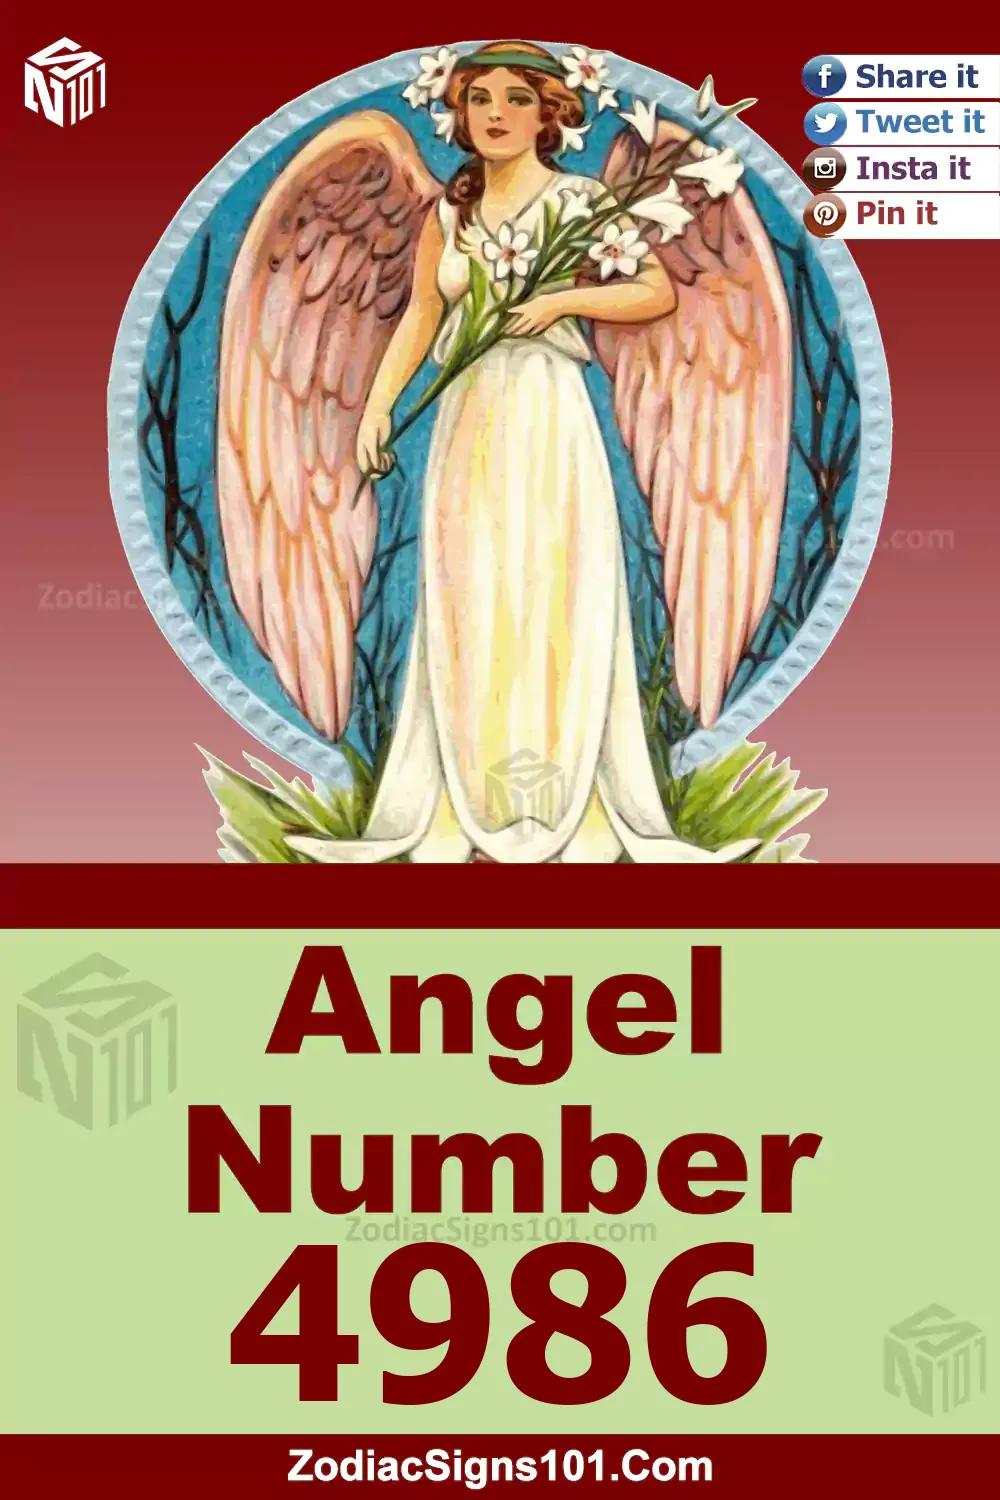 4986-Angel-Number-Meaning.jpg